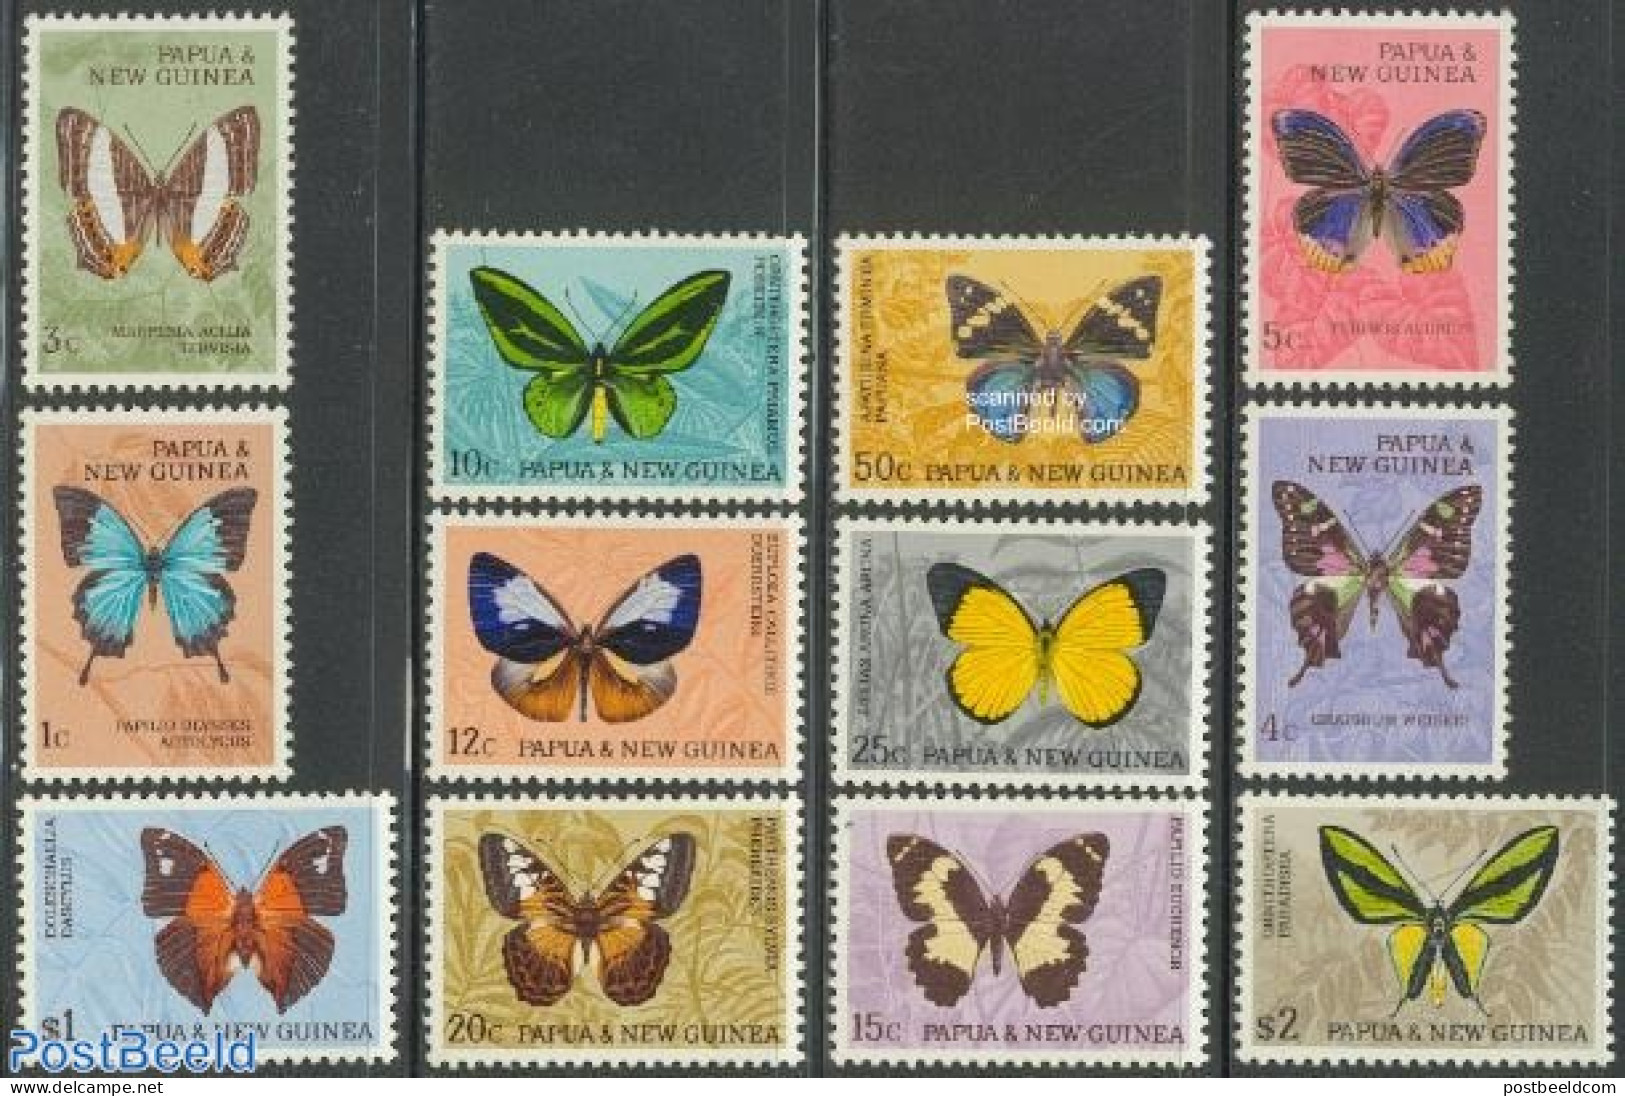 Papua New Guinea 1966 Butterflies 12v, Unused (hinged), Nature - Butterflies - Papouasie-Nouvelle-Guinée